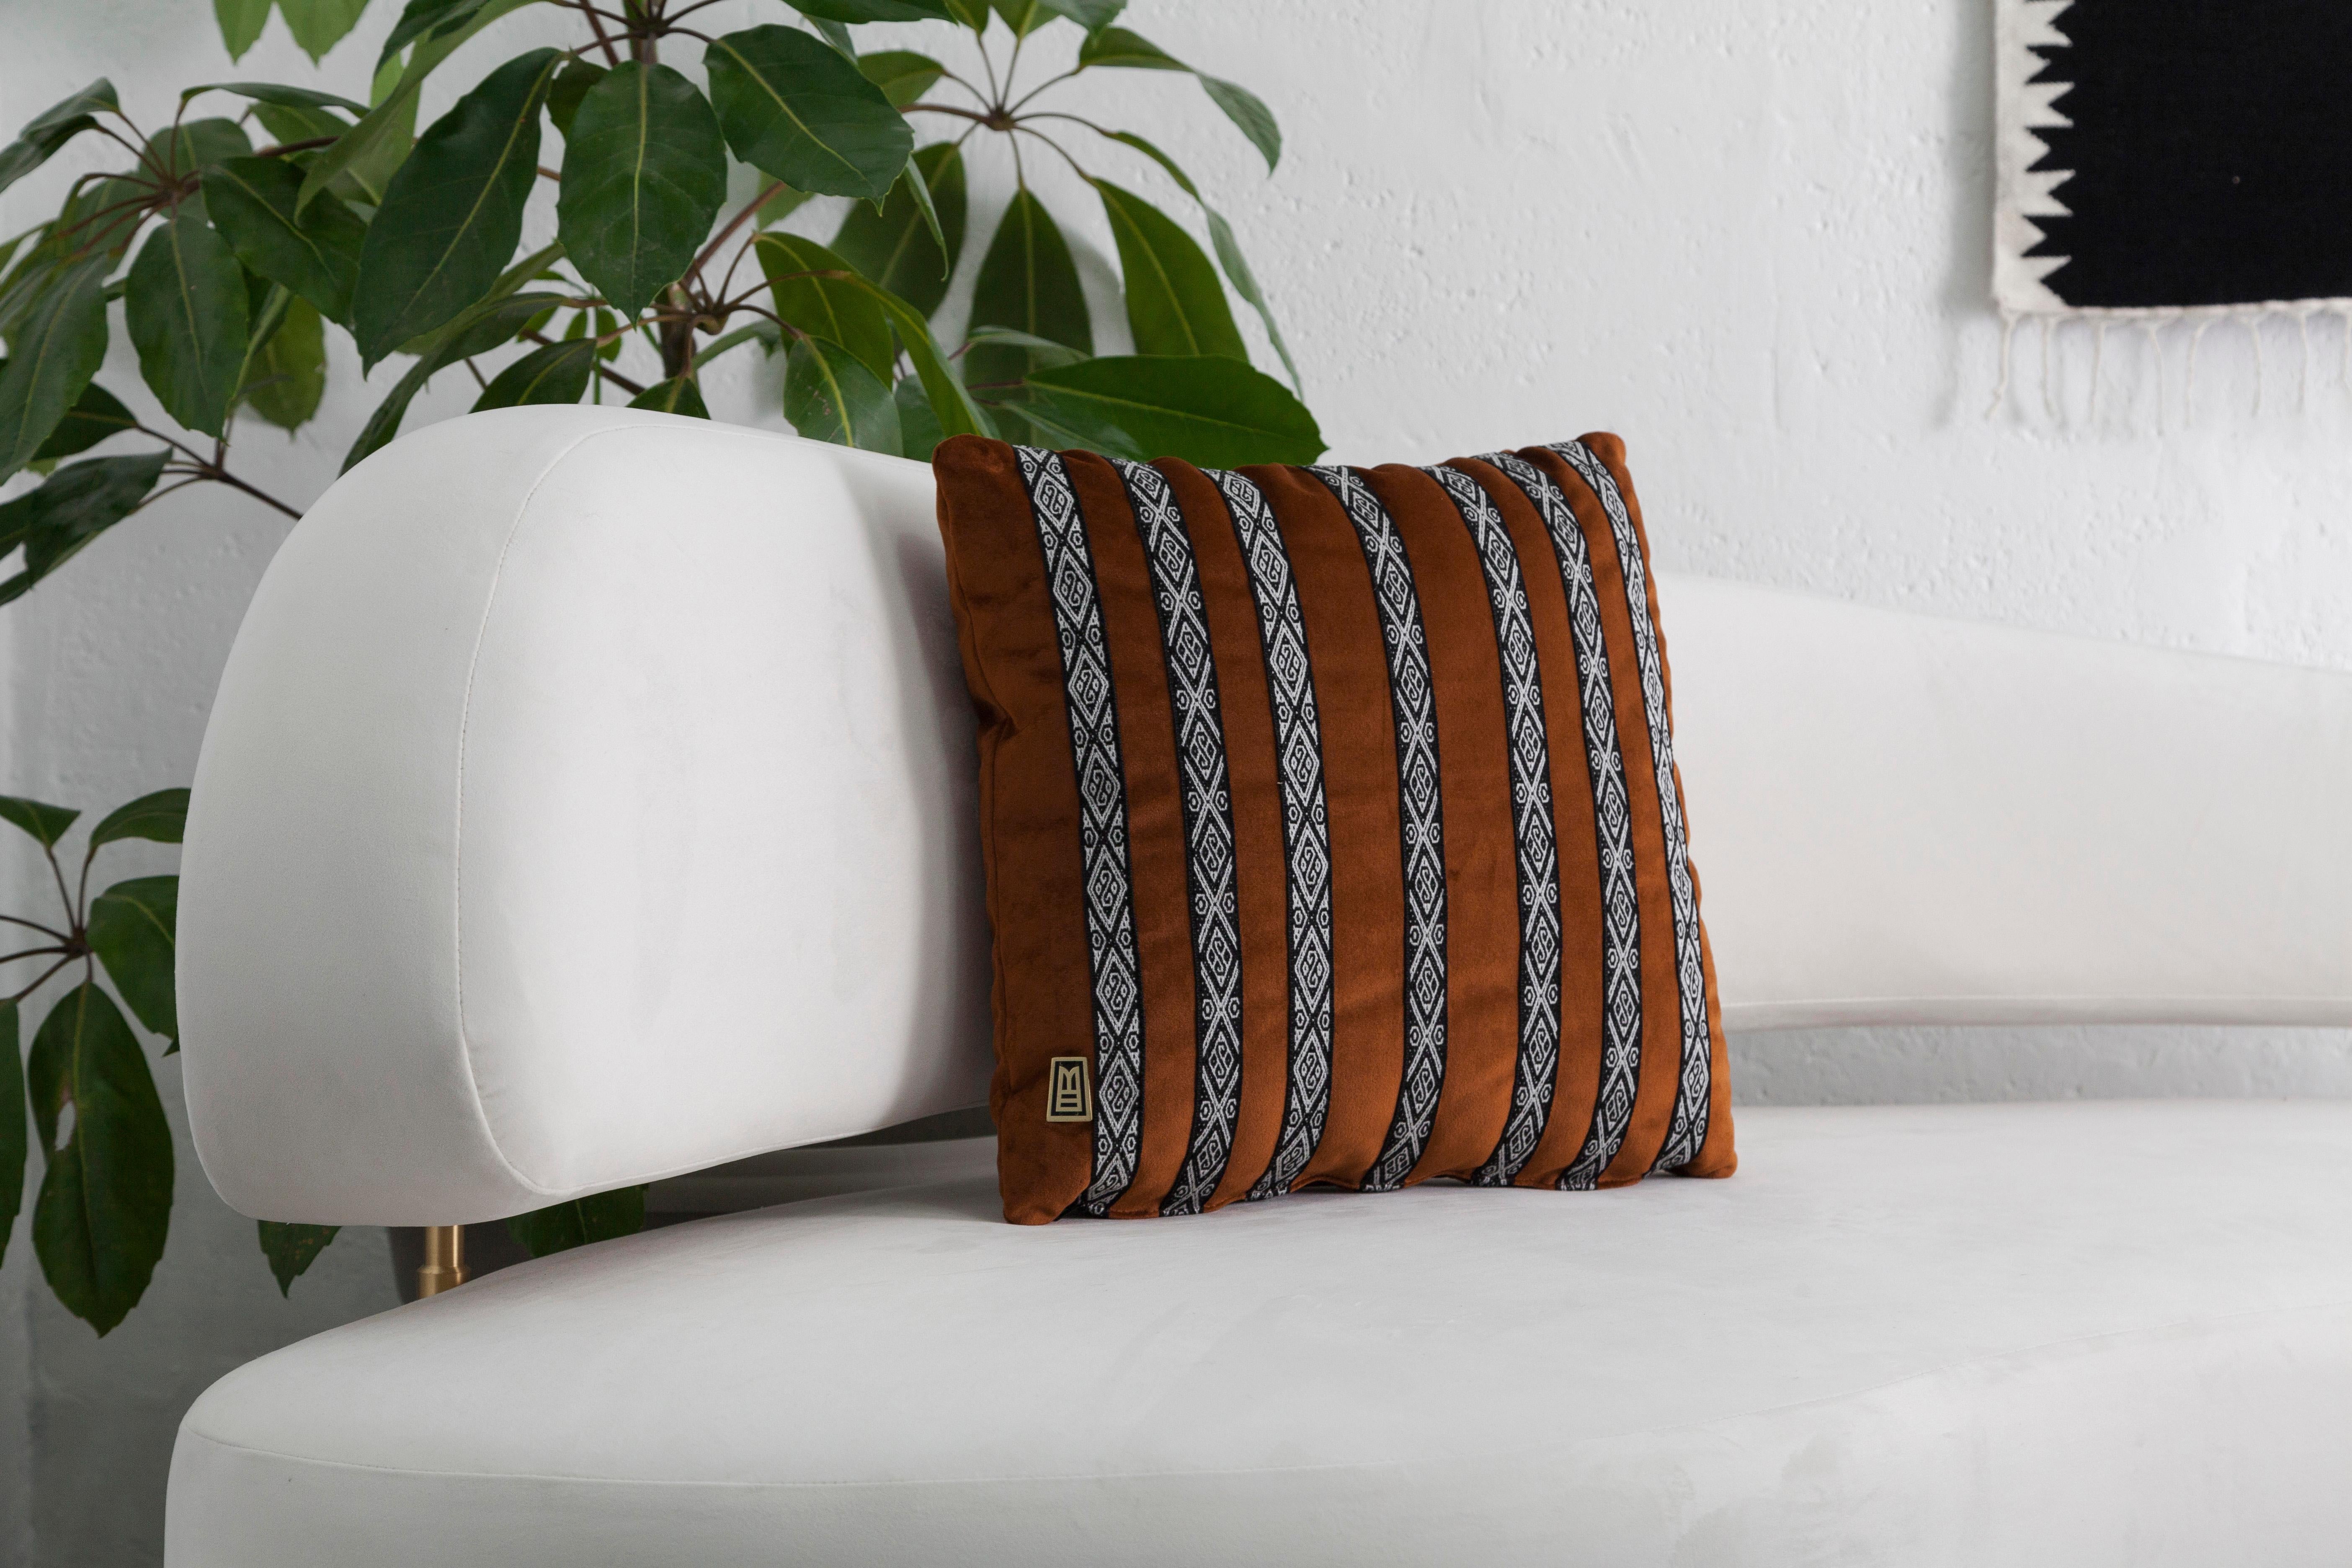 Ecuadorean FAJAS Handwoven Artisanal Sash Pillows in Terracota Velvet by ANDEAN, Set of 2 For Sale